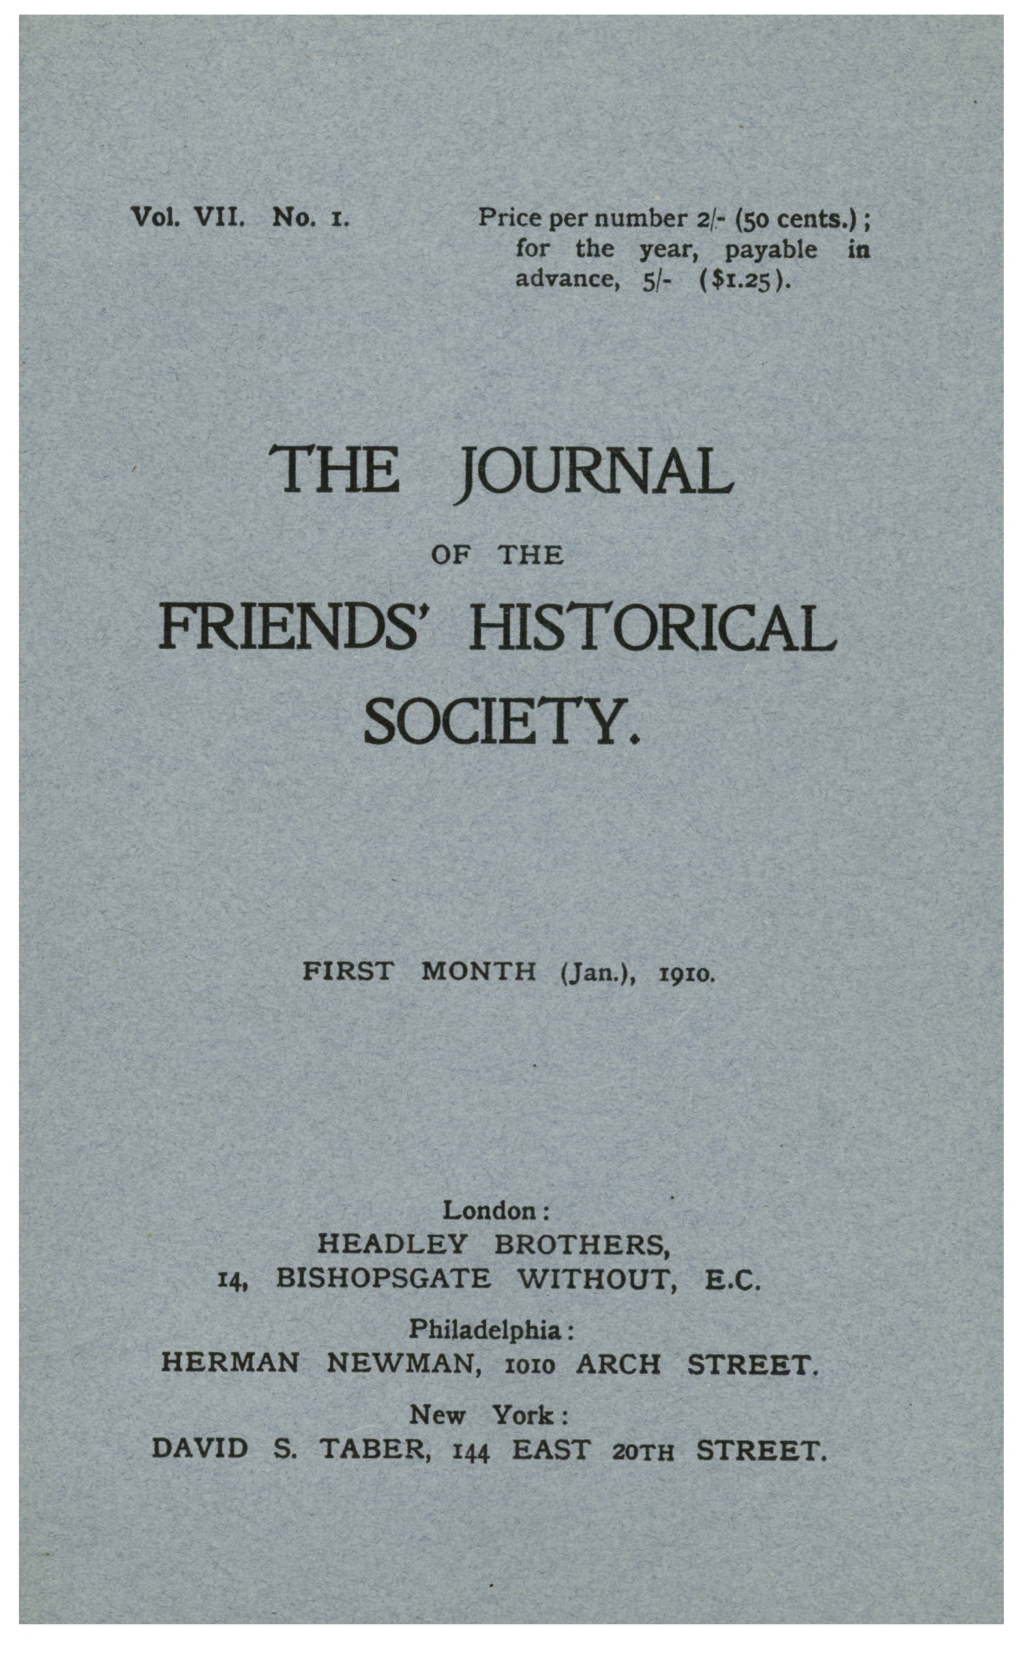 Vol. VII. No. I. HEADLEY BROTHERS, 14, BISHOPSGATE WITHOUT, E.G